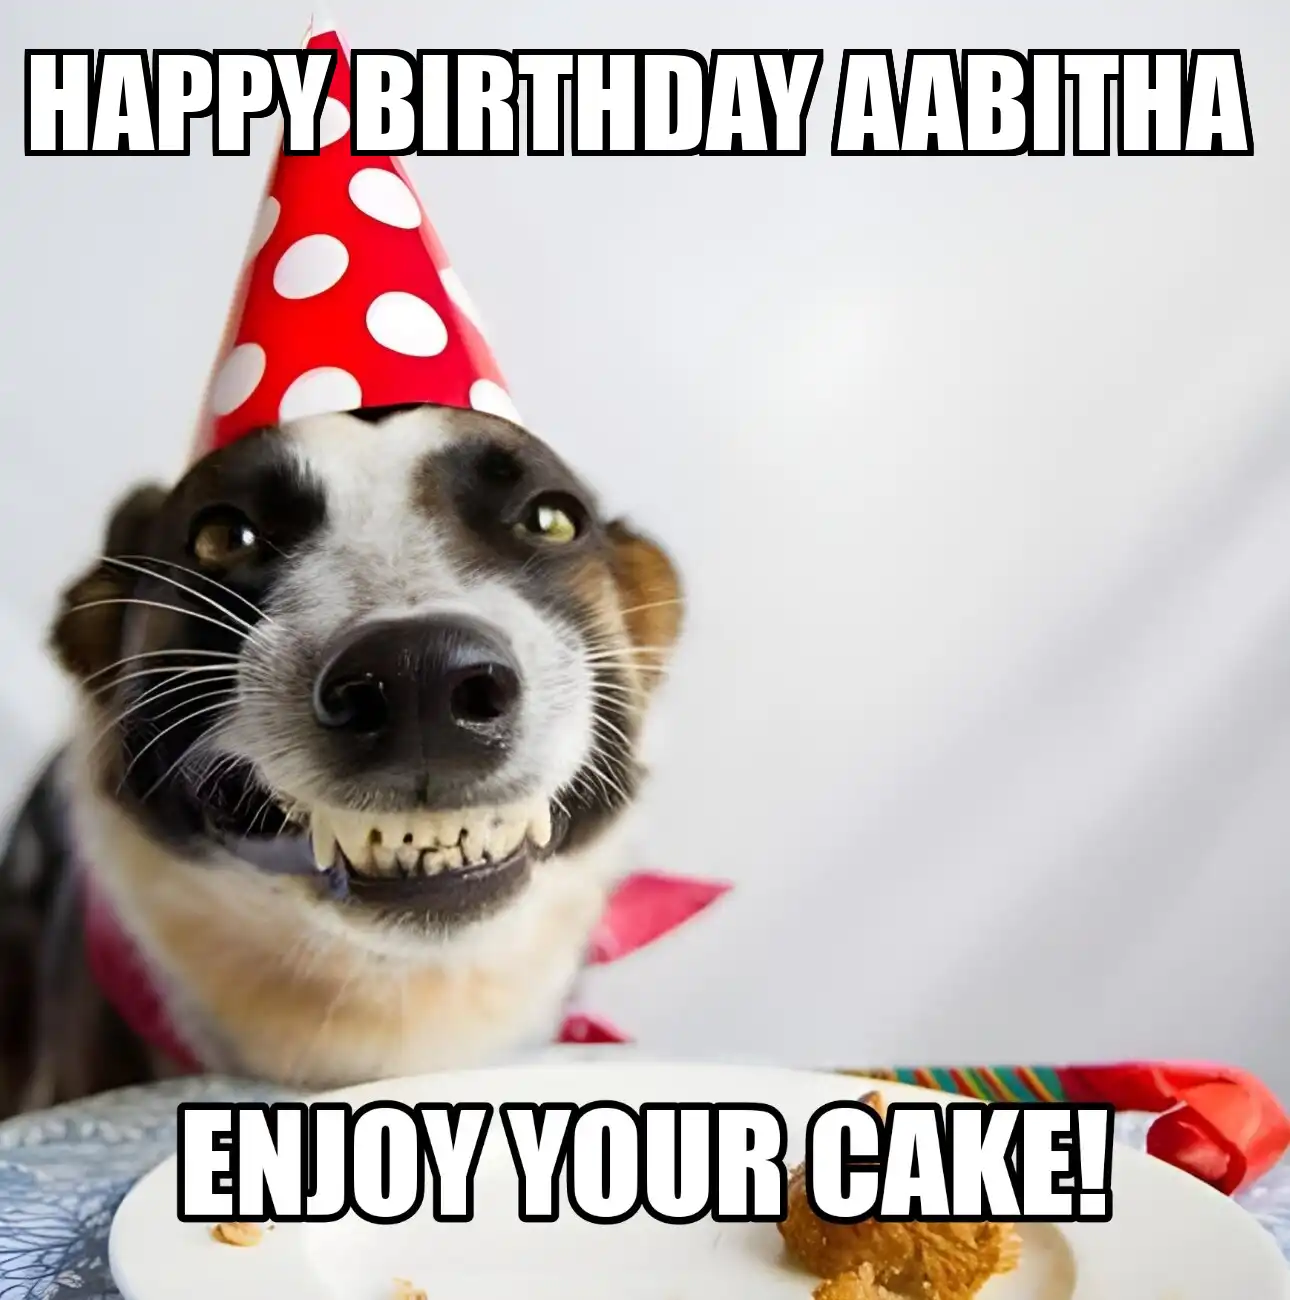 Happy Birthday Aabitha Enjoy Your Cake Dog Meme